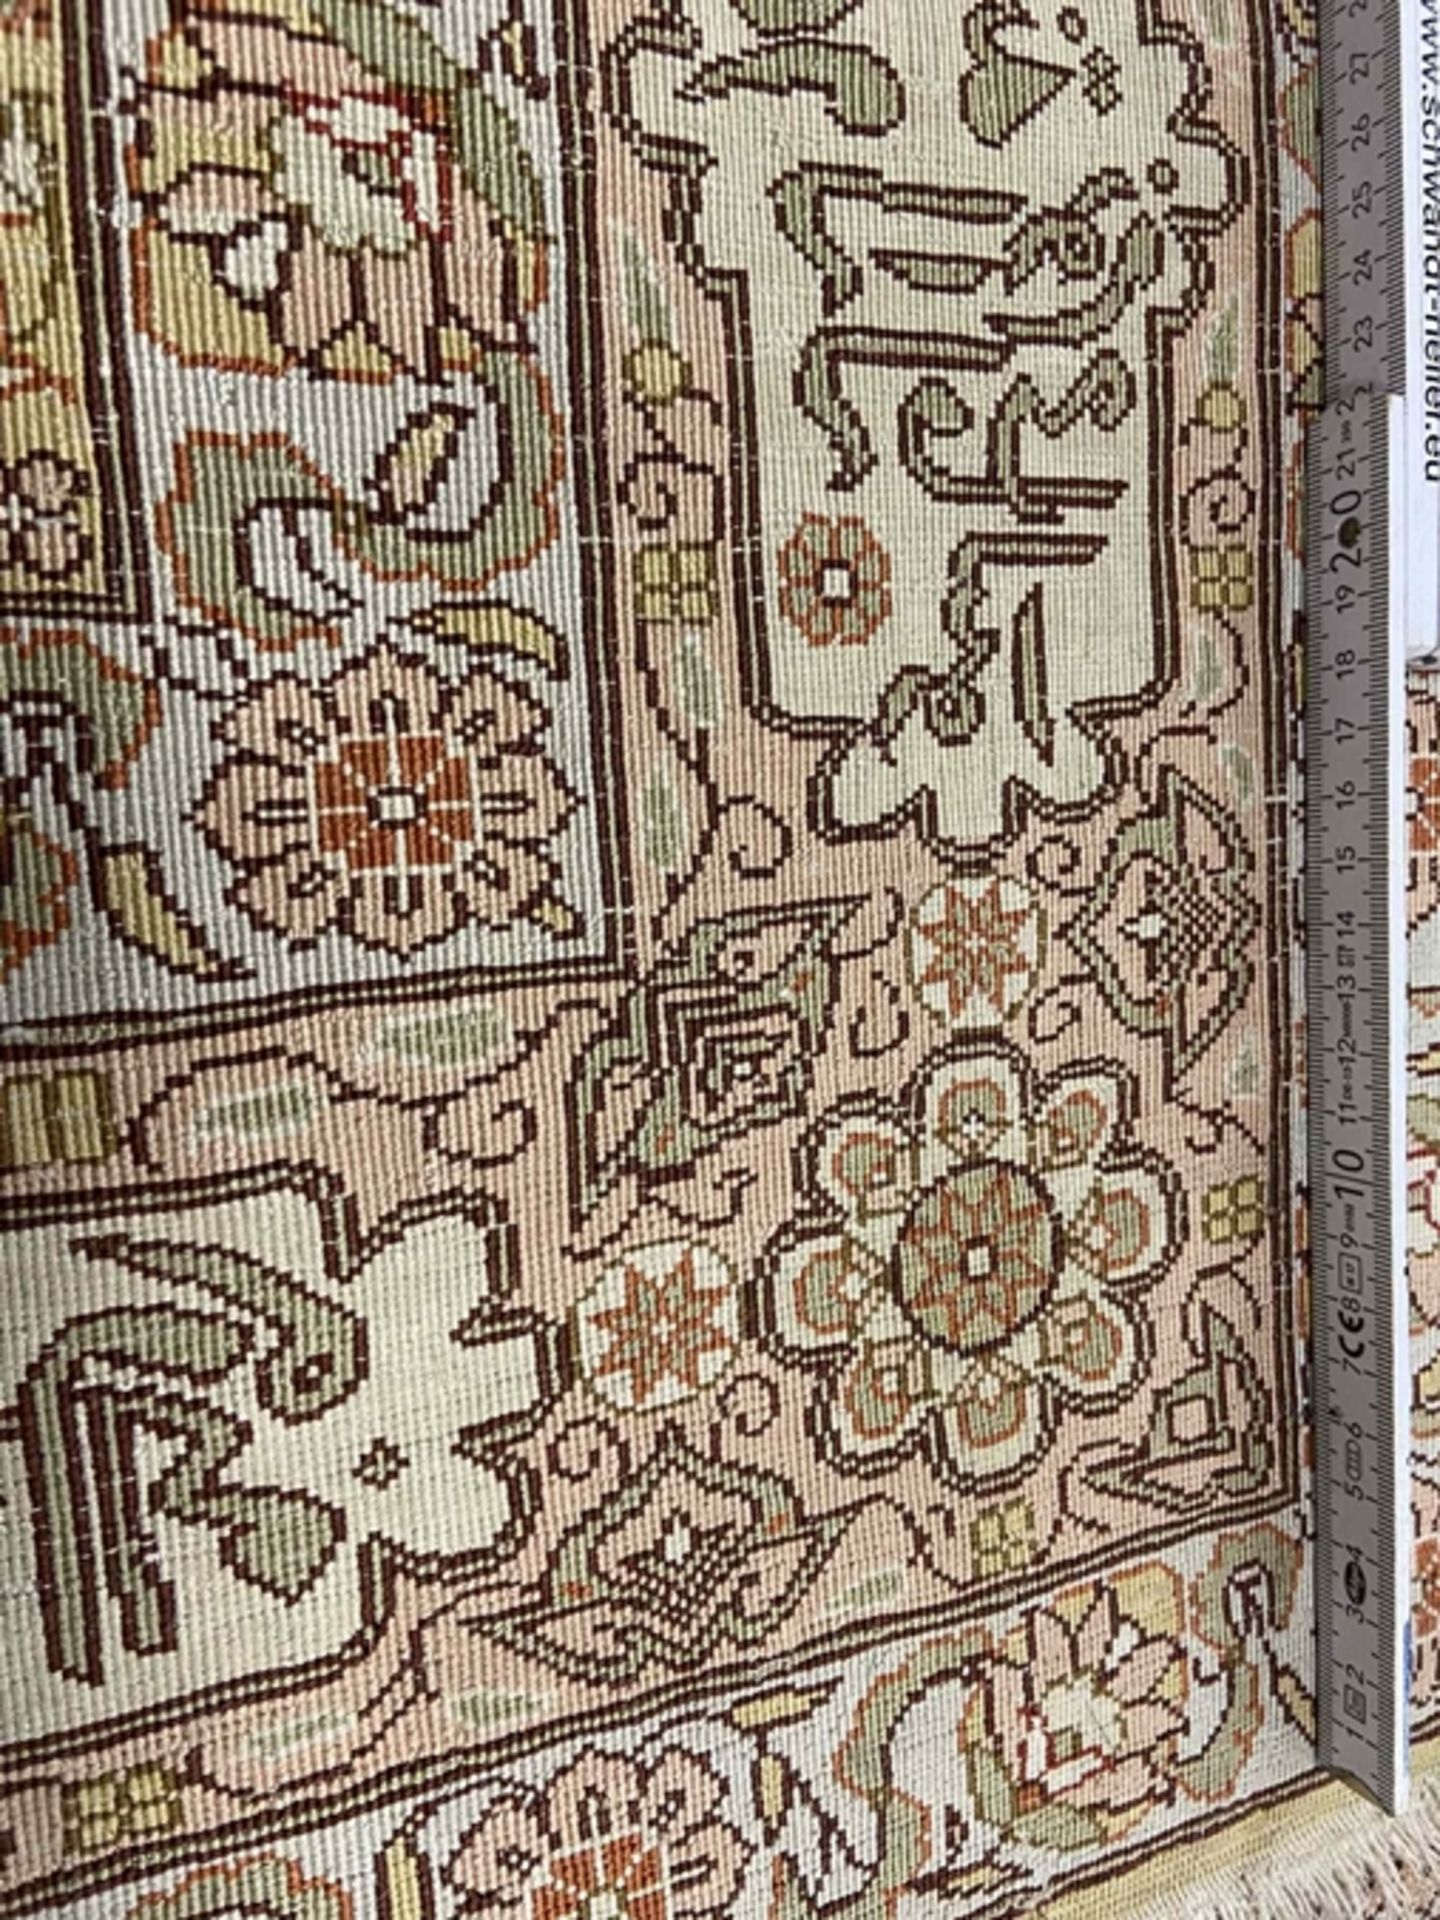 Hereke, Turkey - silk carpet - Image 8 of 8